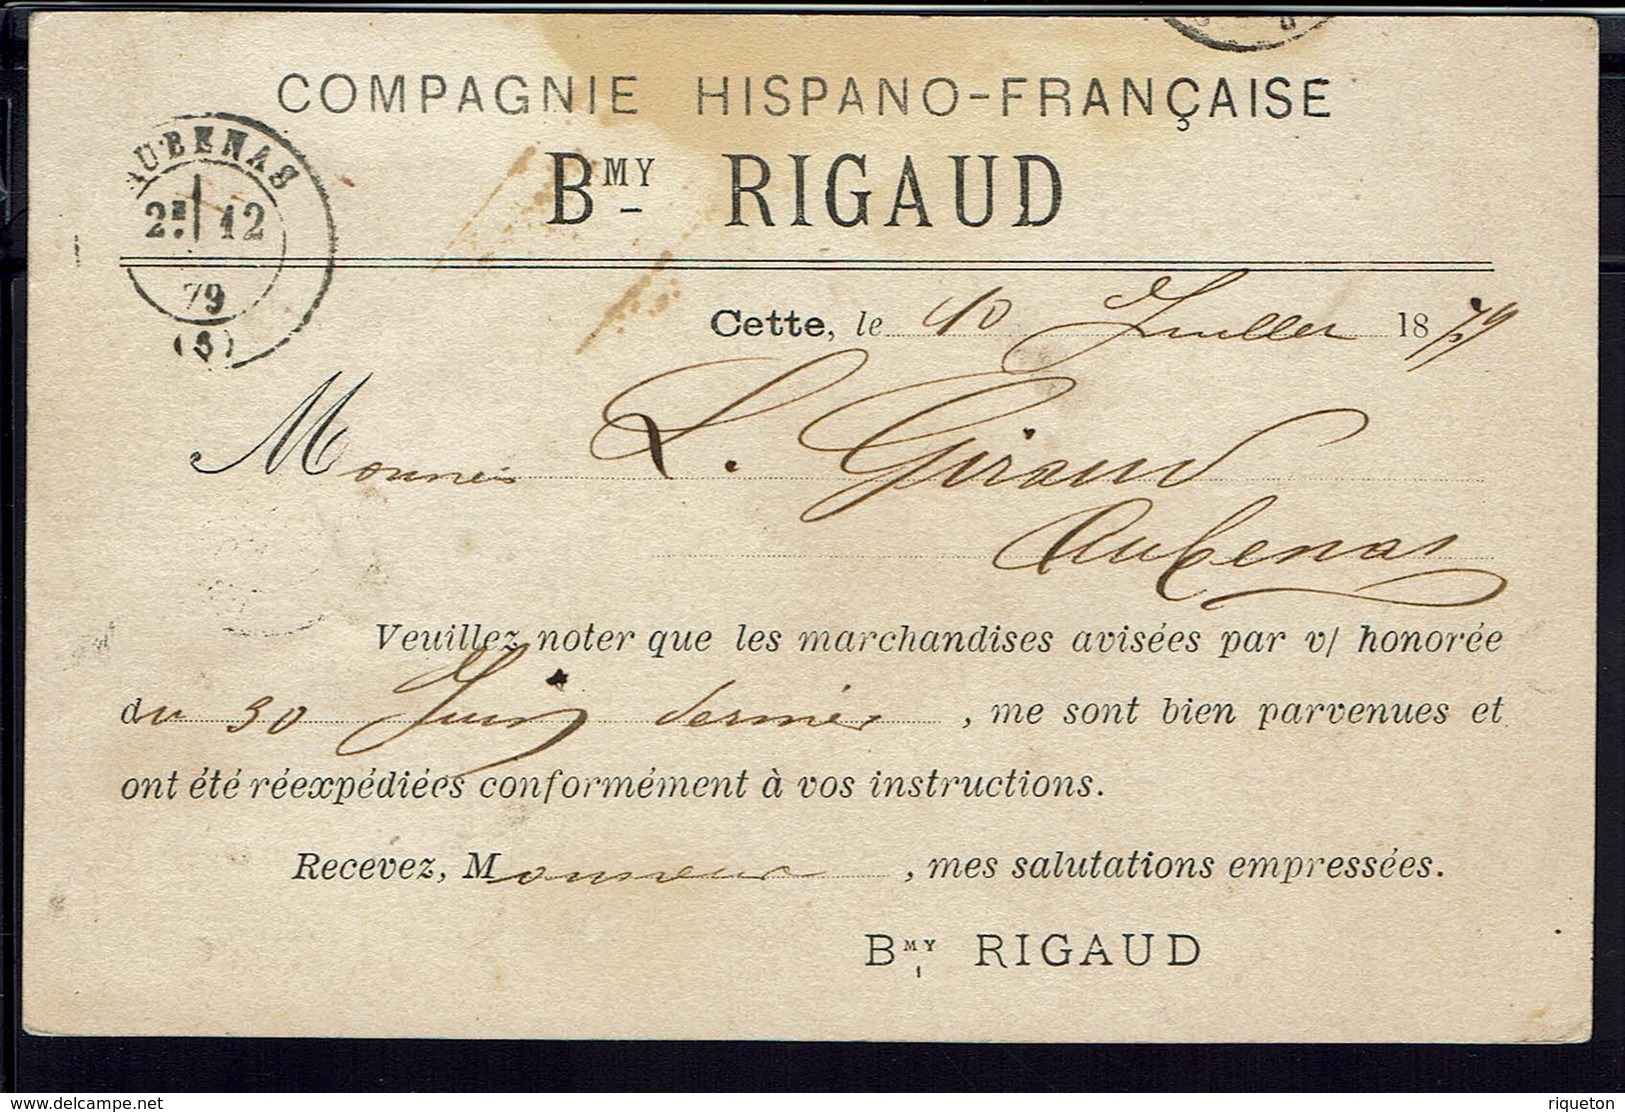 FR - 1879 - Carte Postale Type Sage 10 C. De Cette Pour Aubenas - Repiquage Bmy Rigaud (Compagnie Hispano-Française) - Overprinter Postcards (before 1995)